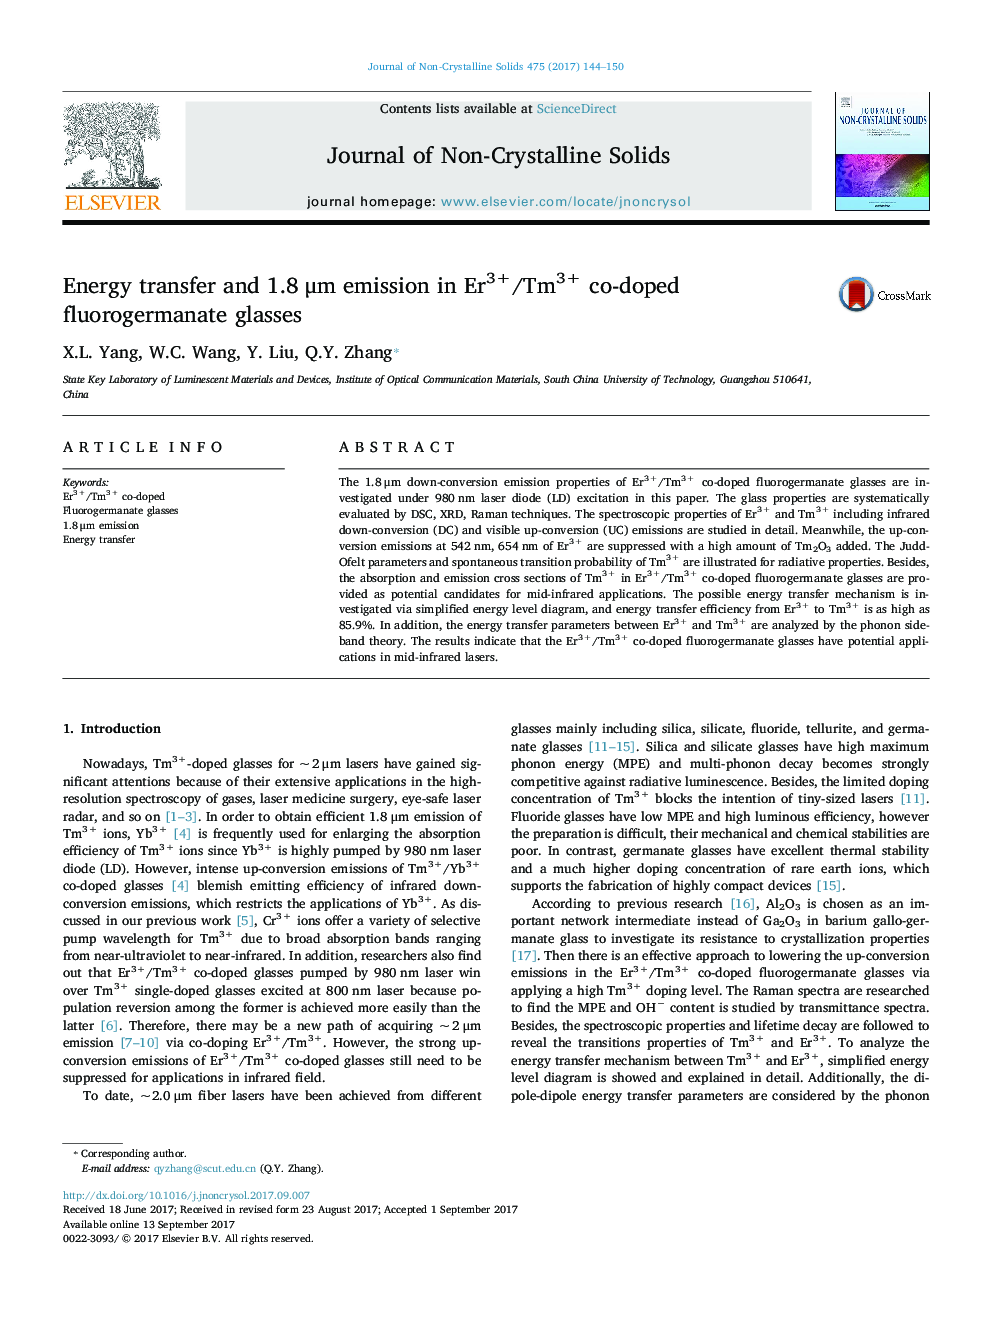 Energy transfer and 1.8Â Î¼m emission in Er3+/Tm3+ co-doped fluorogermanate glasses